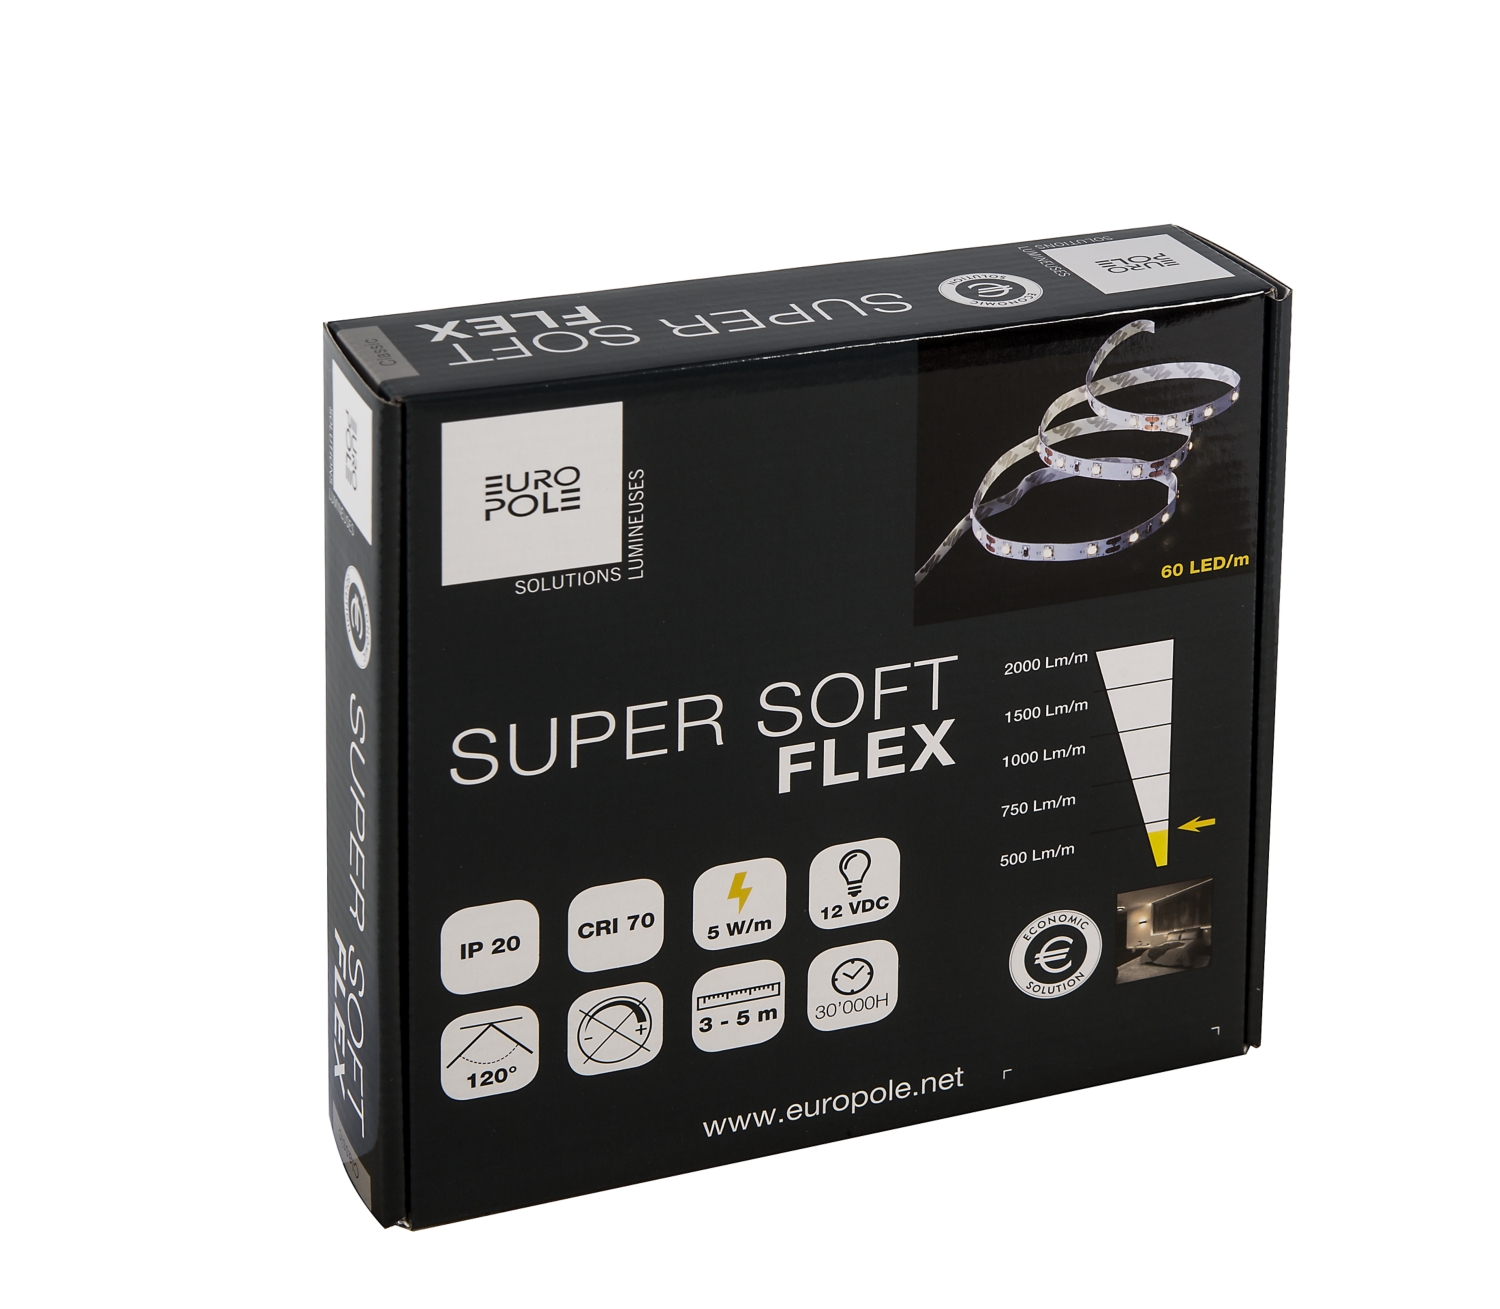  Pack bandeau Led Super Soft Flex - 5 m -5 W/m 